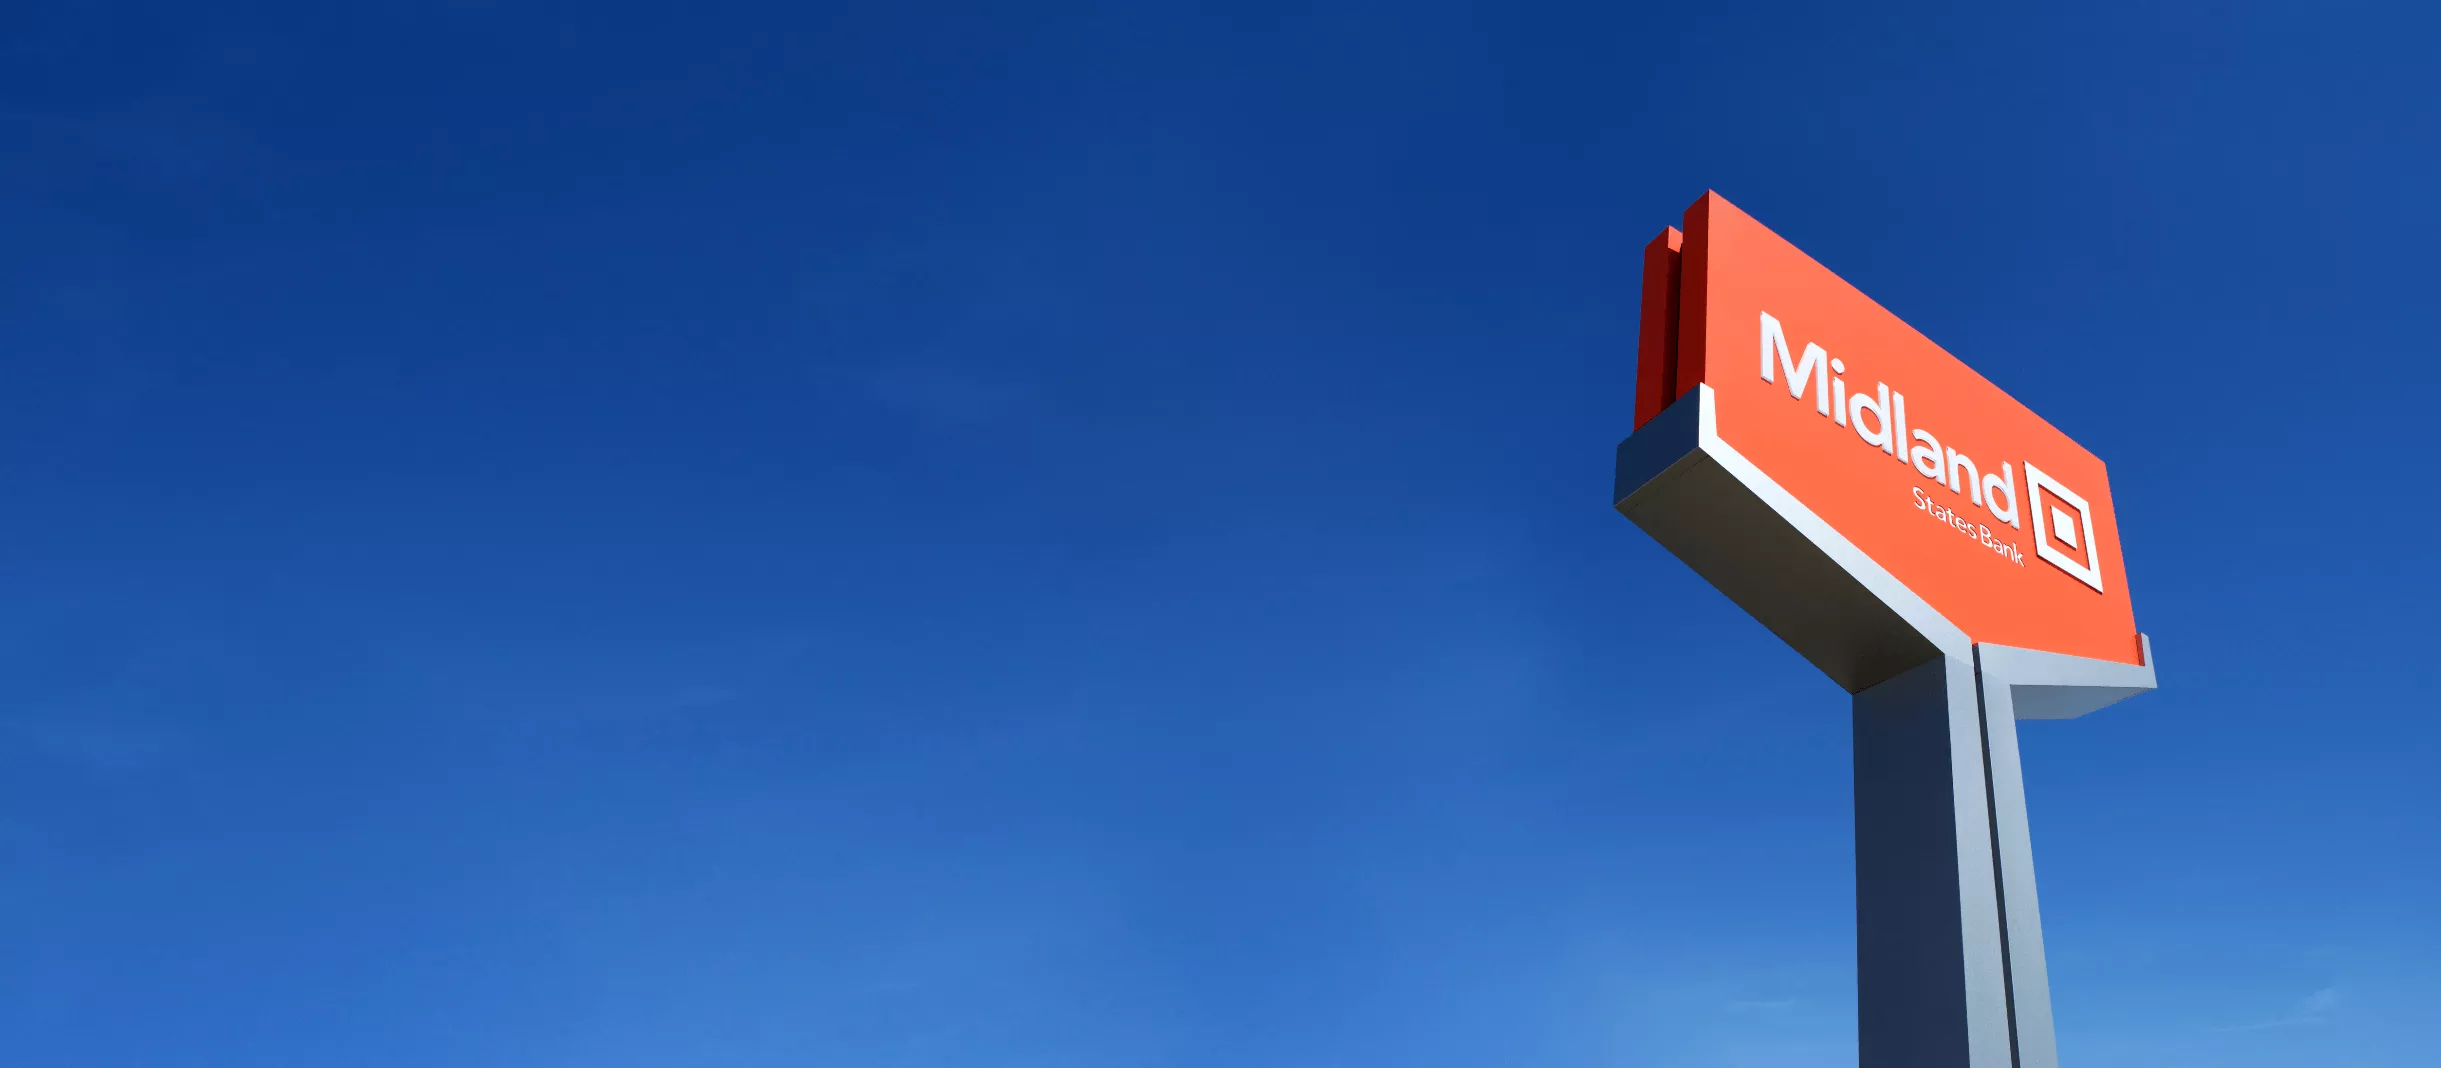 Midland States Bank Sign on blue sky